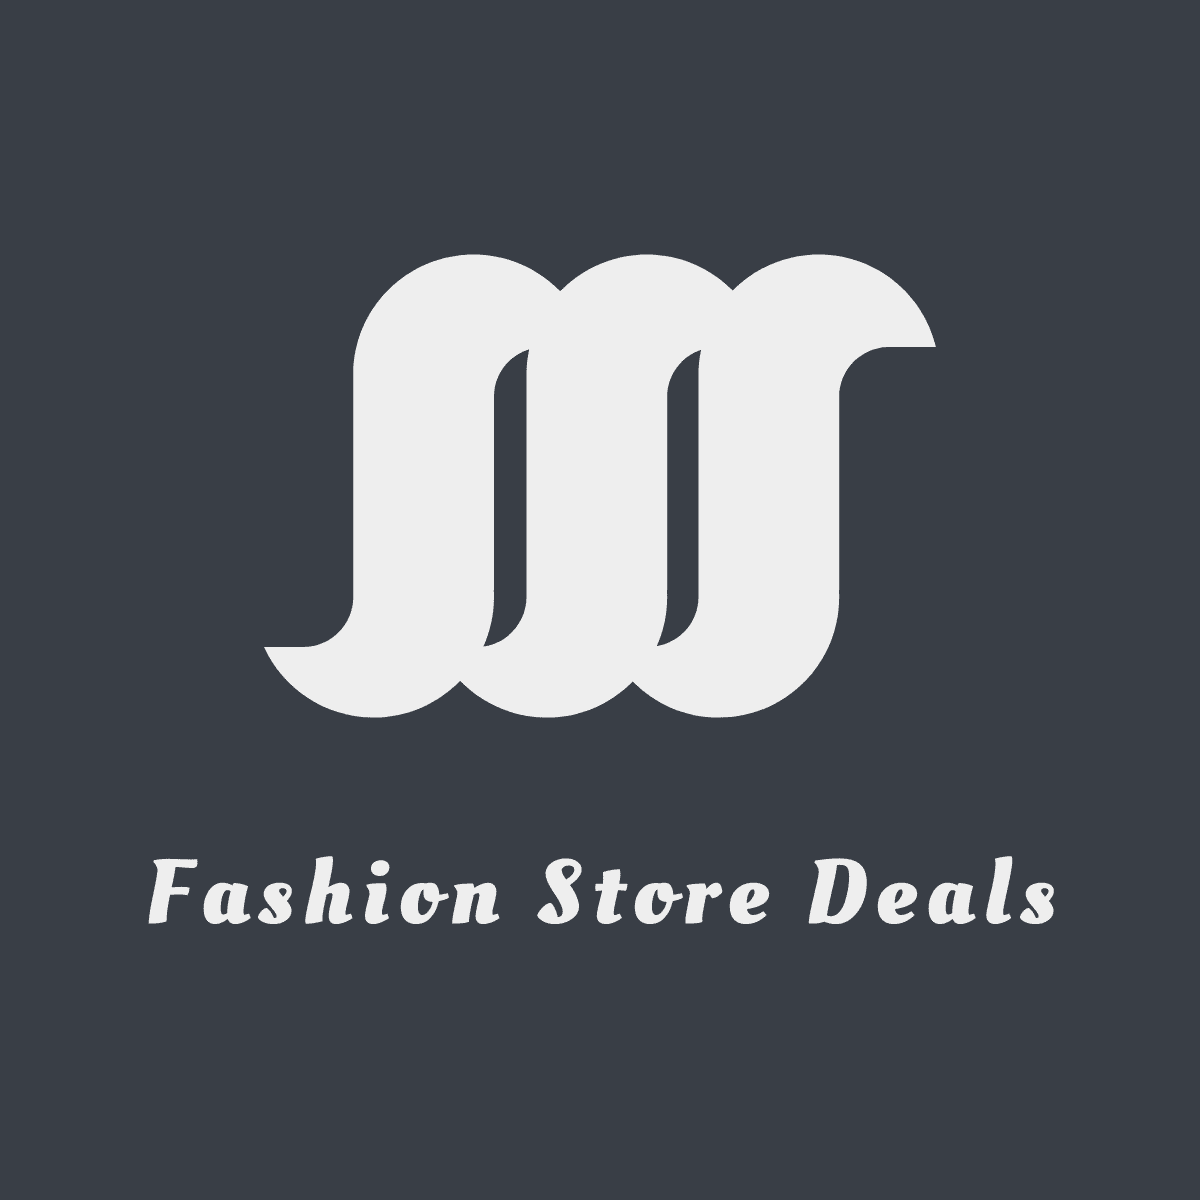 Fashion Store Deals